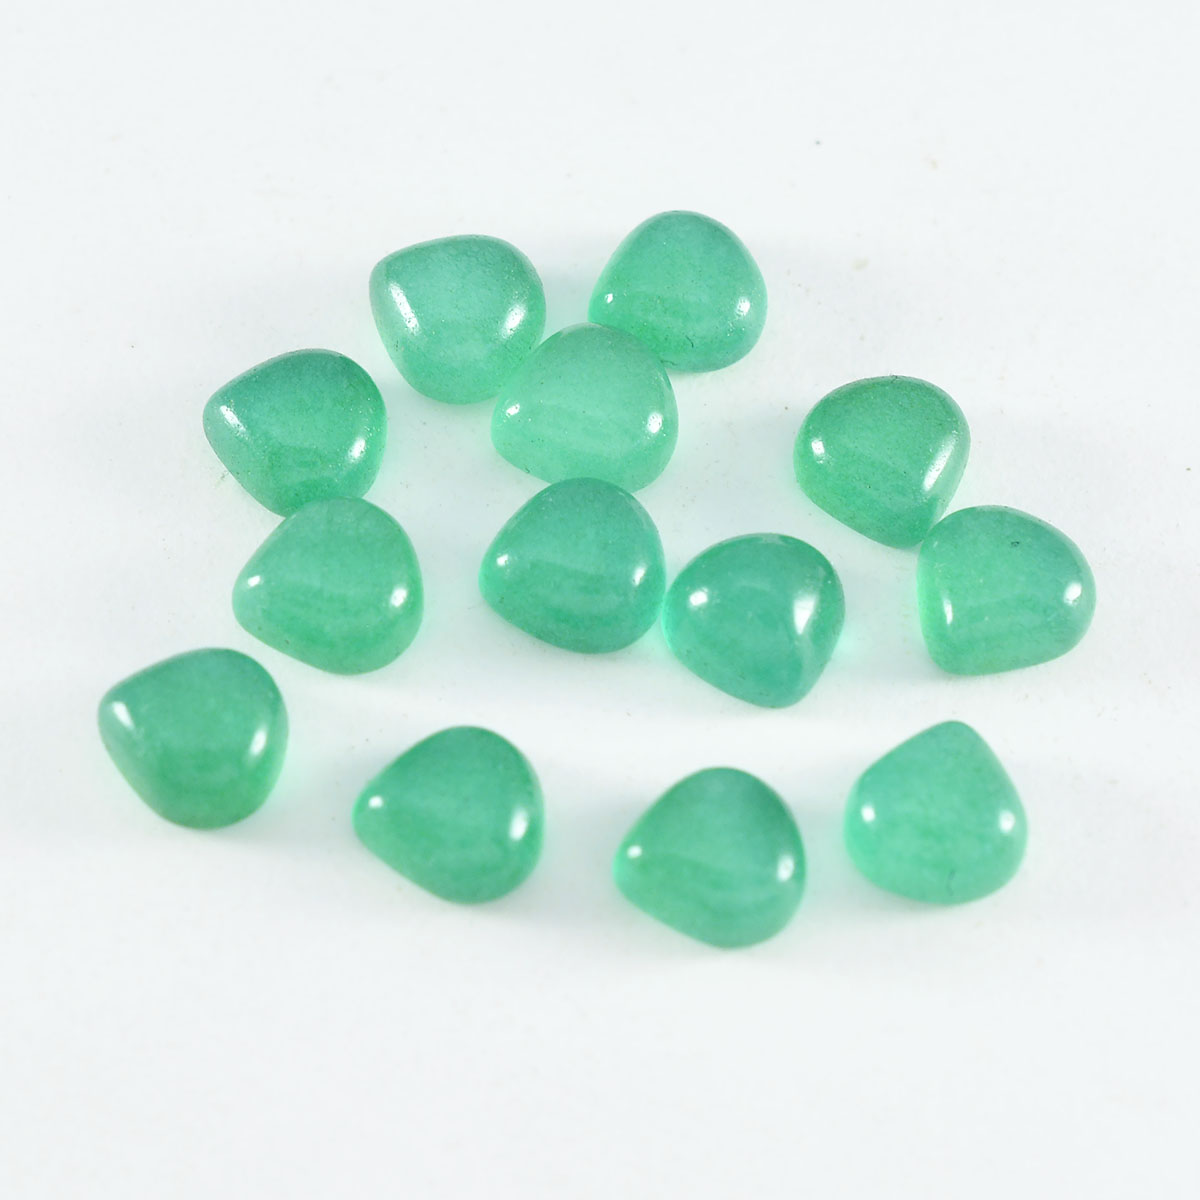 Riyogems 1PC Green Onyx Cabochon 6x6 mm Heart Shape lovely Quality Loose Stone